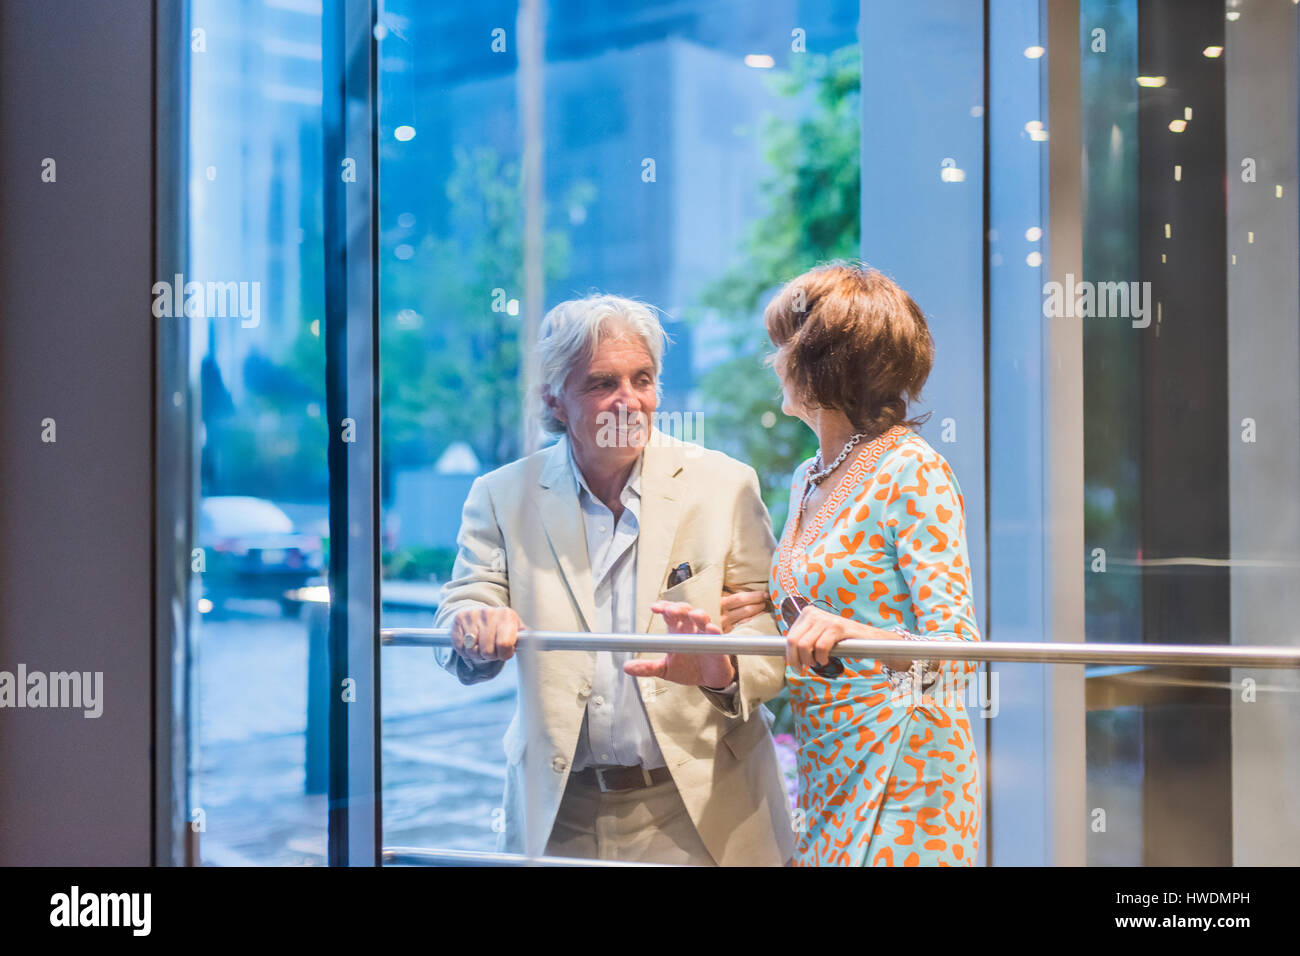 Senior couple using hotel revolving door Stock Photo